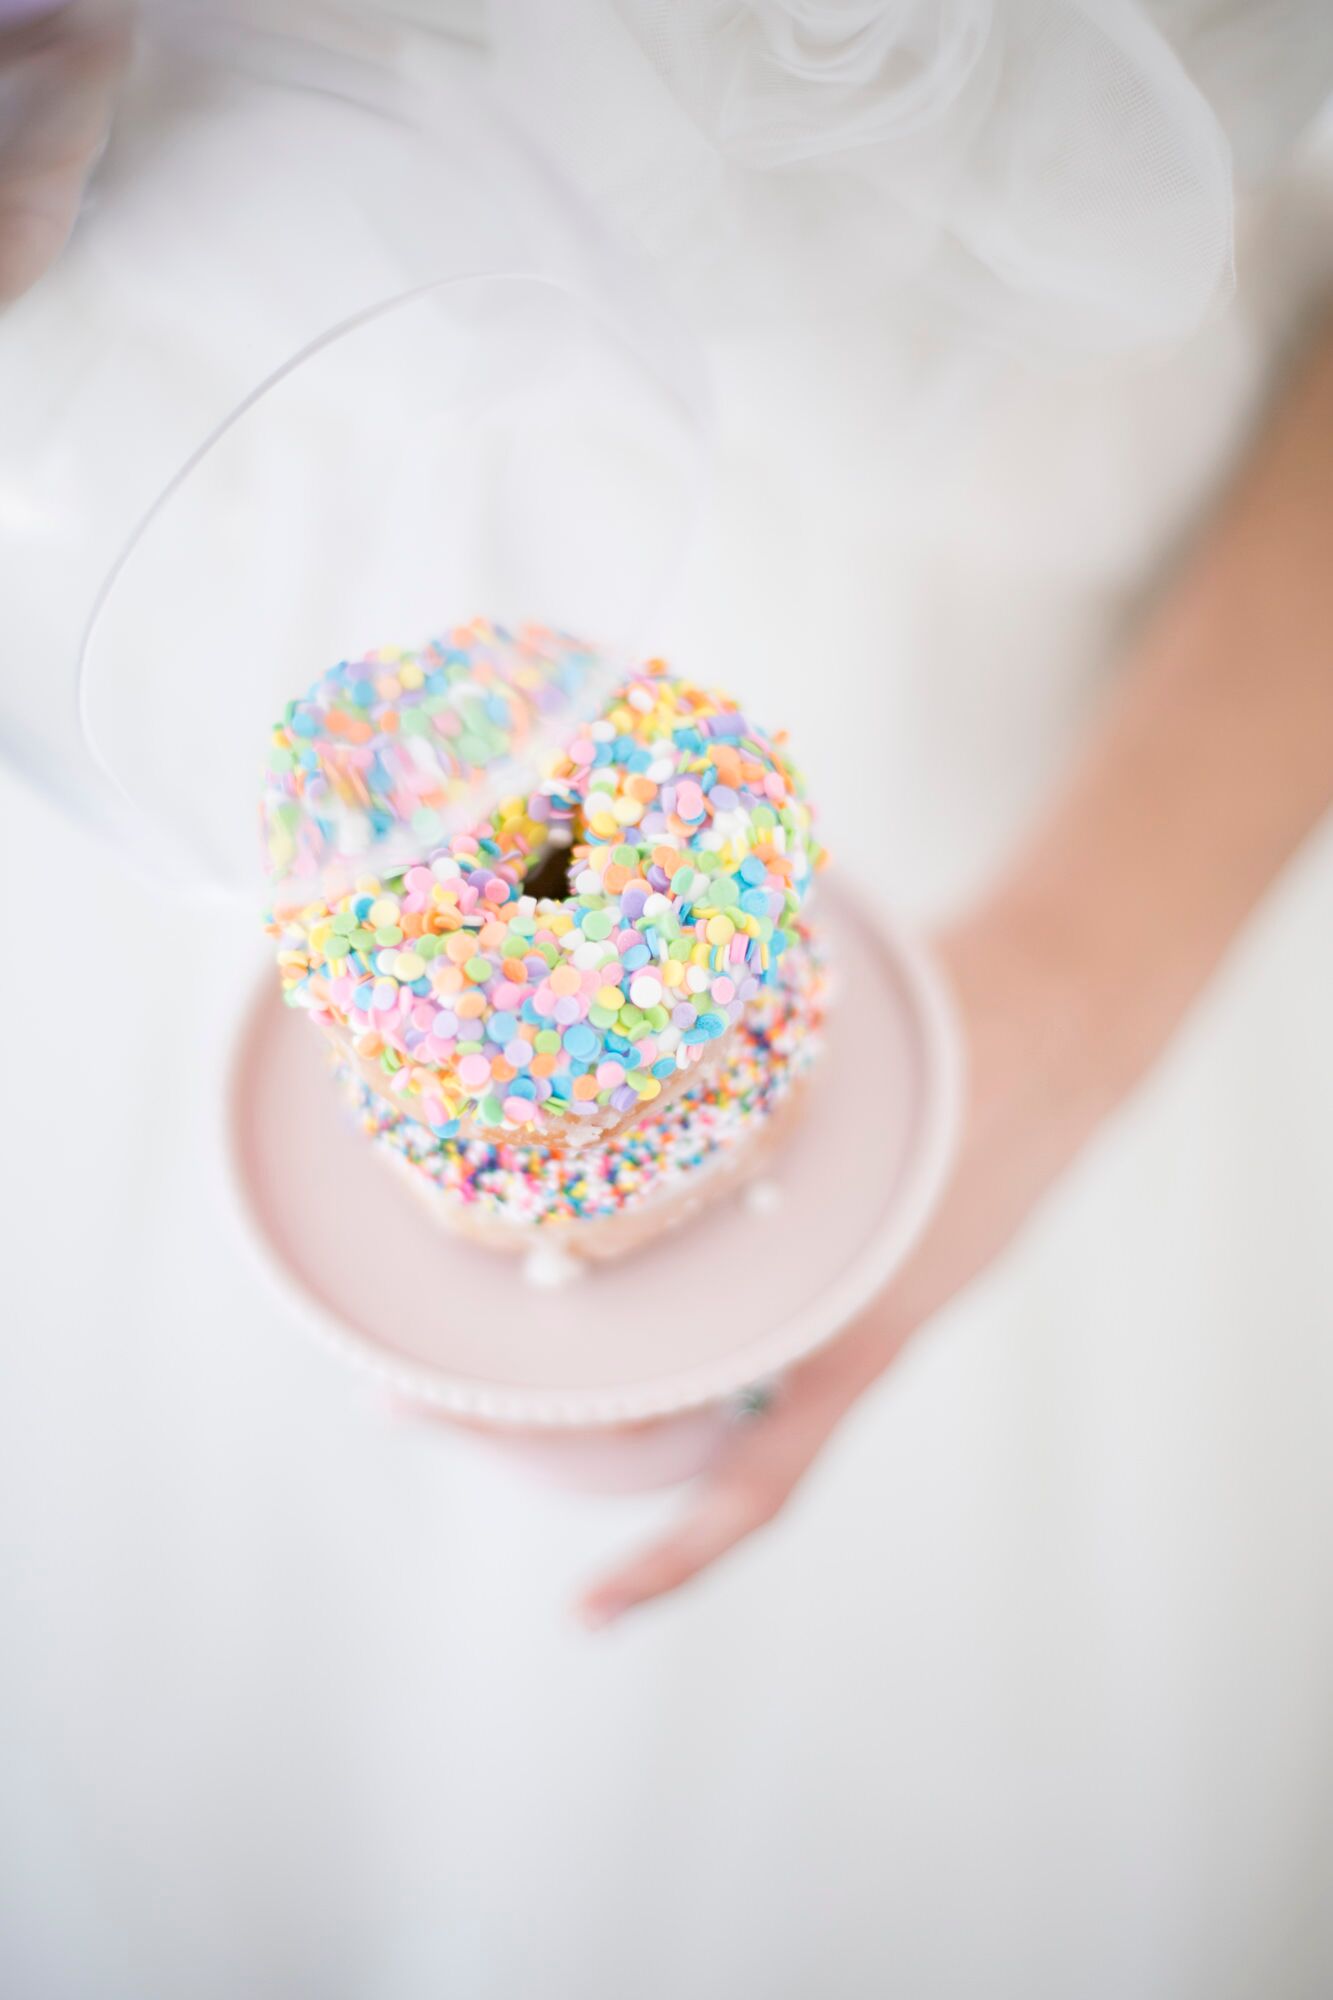 niagara-wedding-cakes-mini-cakes-donuts-cake-pops-cookes-cupcakes-macaroons-sweet-celebrations-custom-sweets-012.JPG